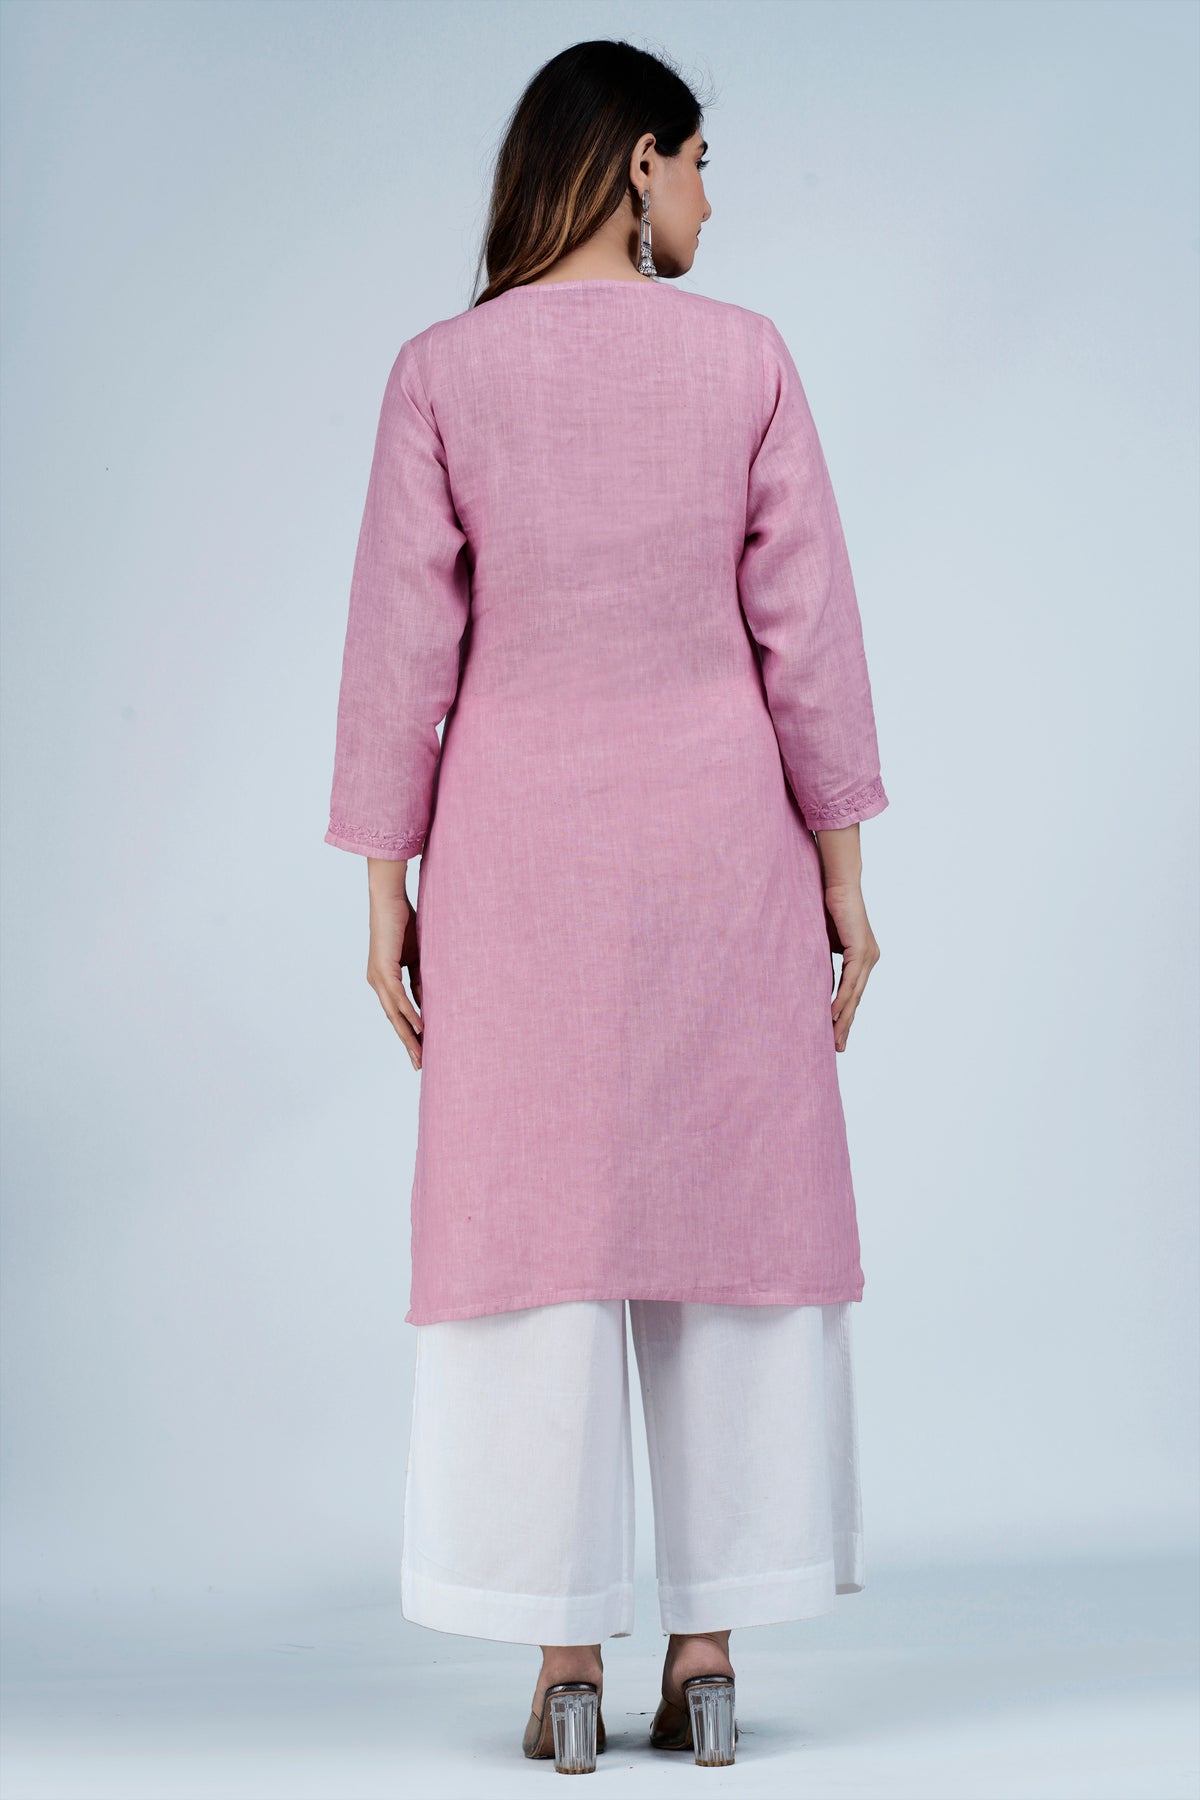 JAYA Linen-Cotton Hand Embroidered Tunic Kurti: Made to Order/Customizable